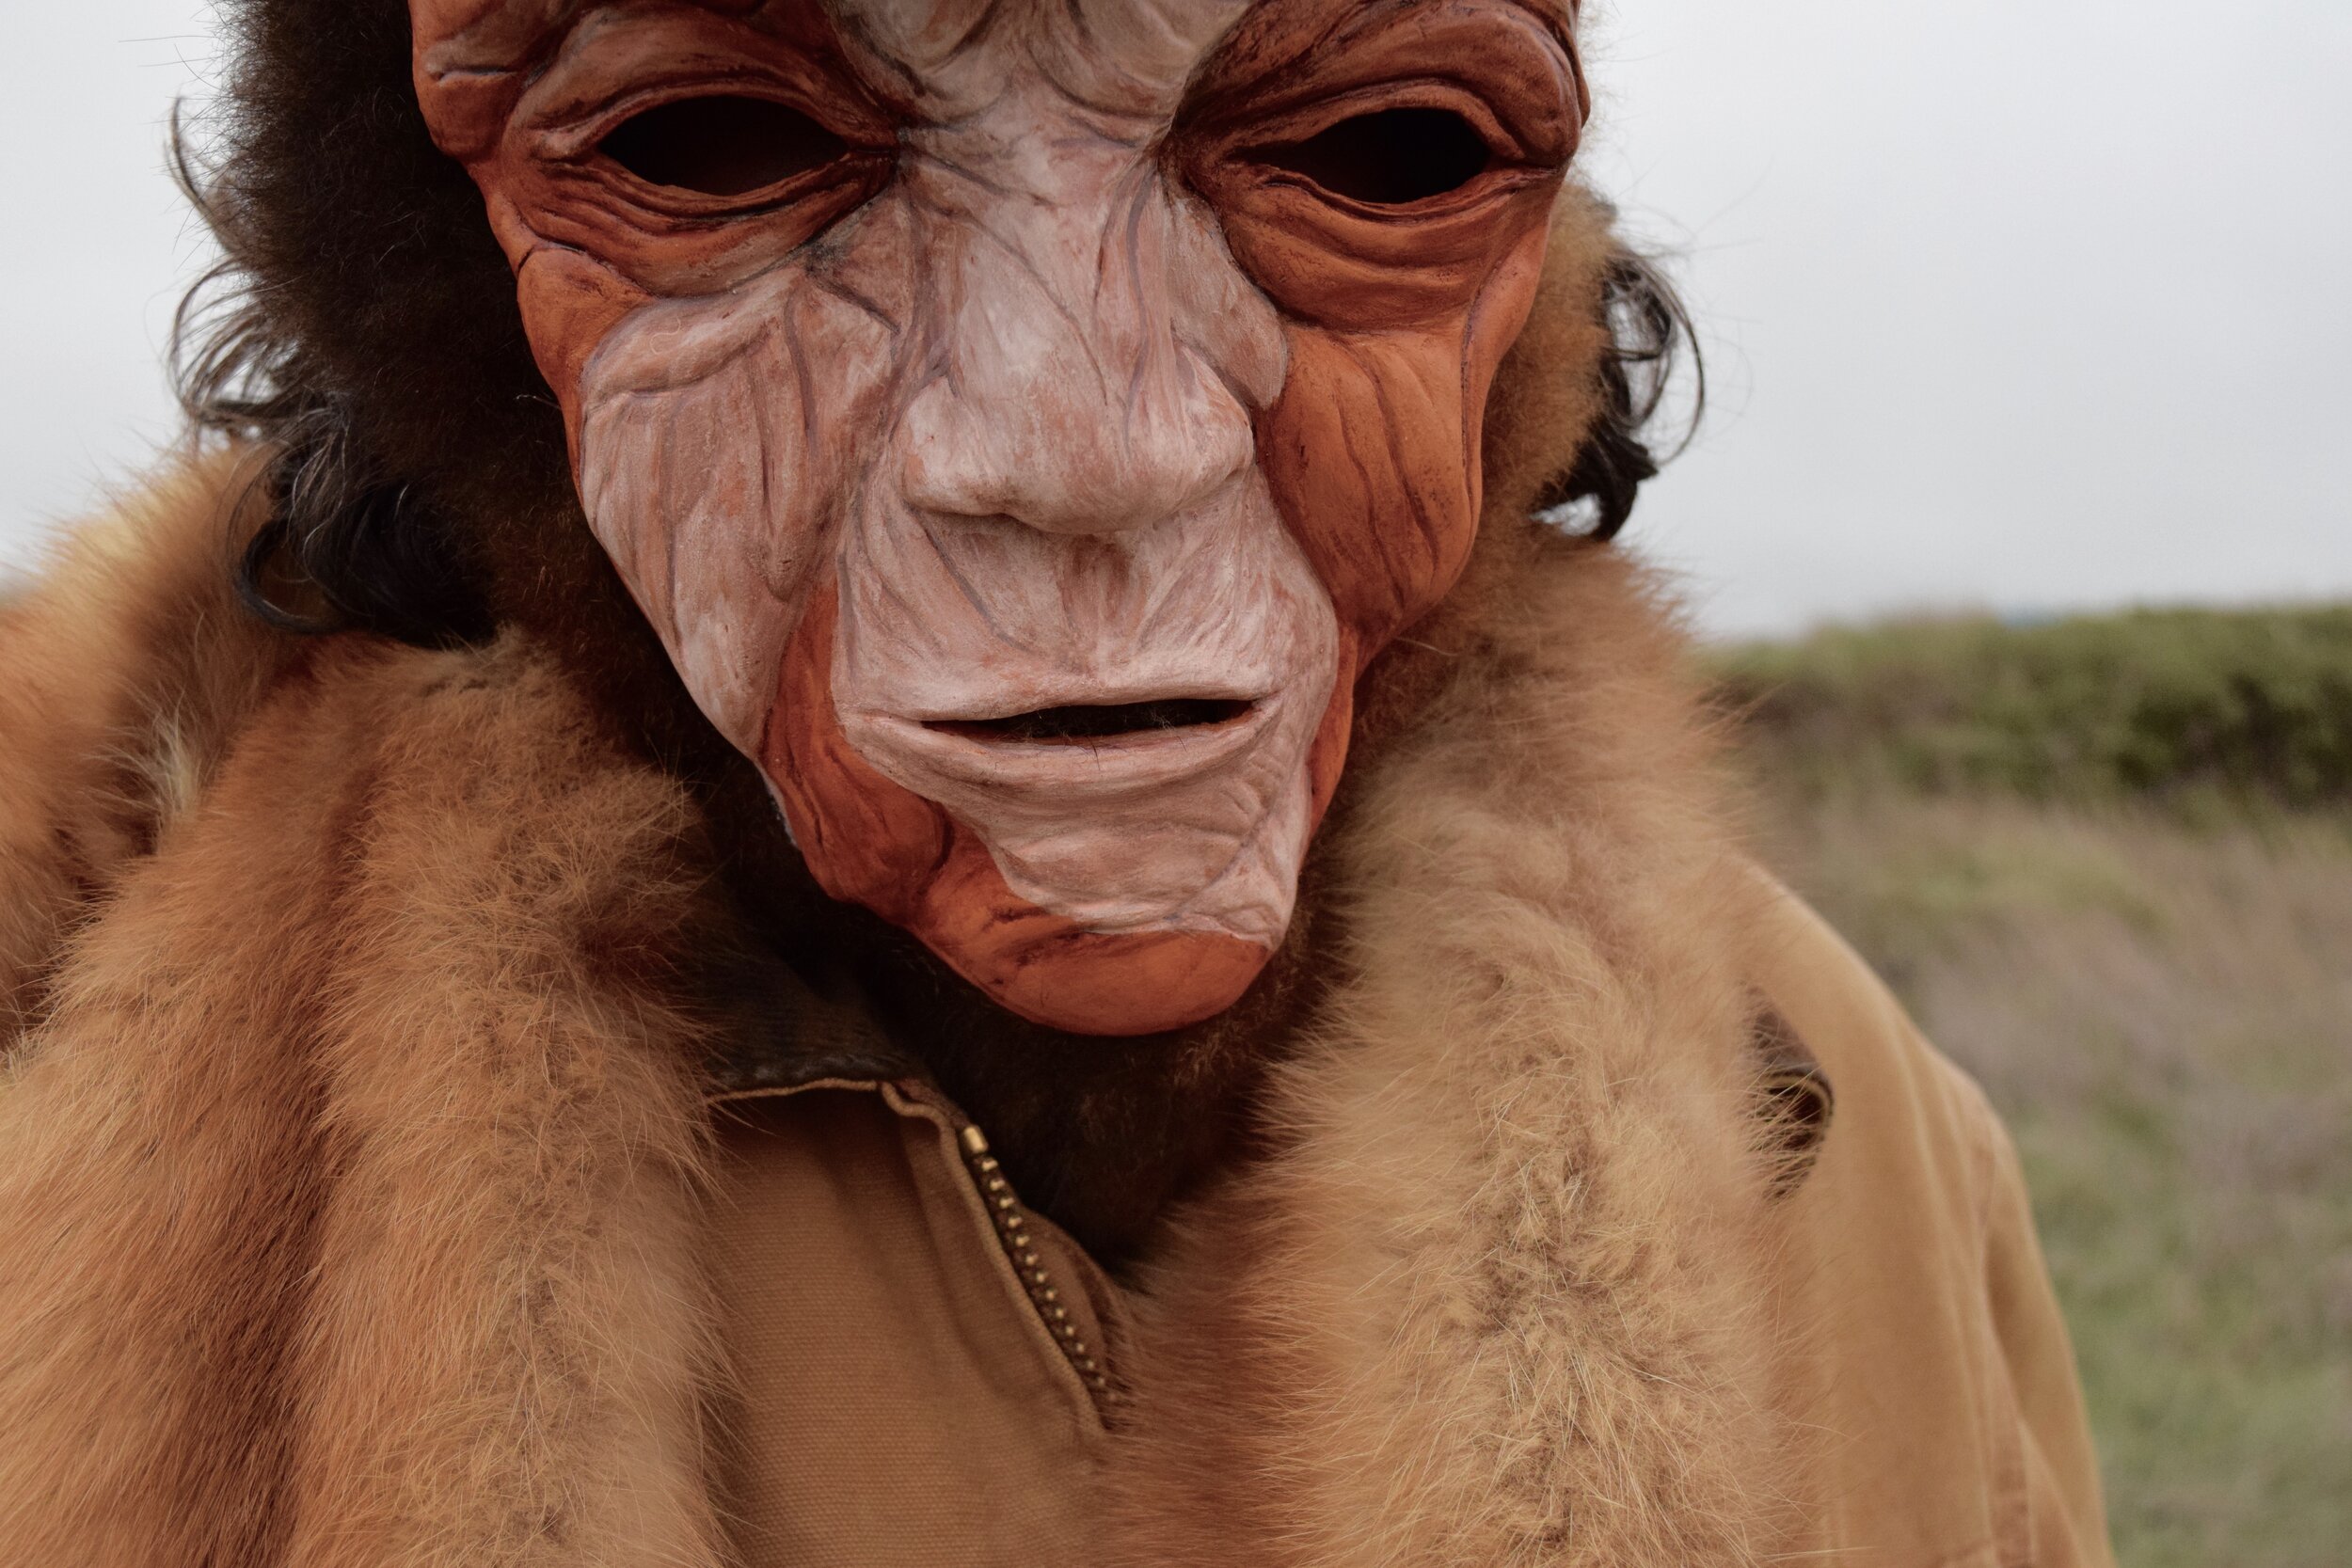  Ceramic mask, acrylic paint, ink, salvaged fur coat. Photo and concept: Rachel Pozivenec. 2015 